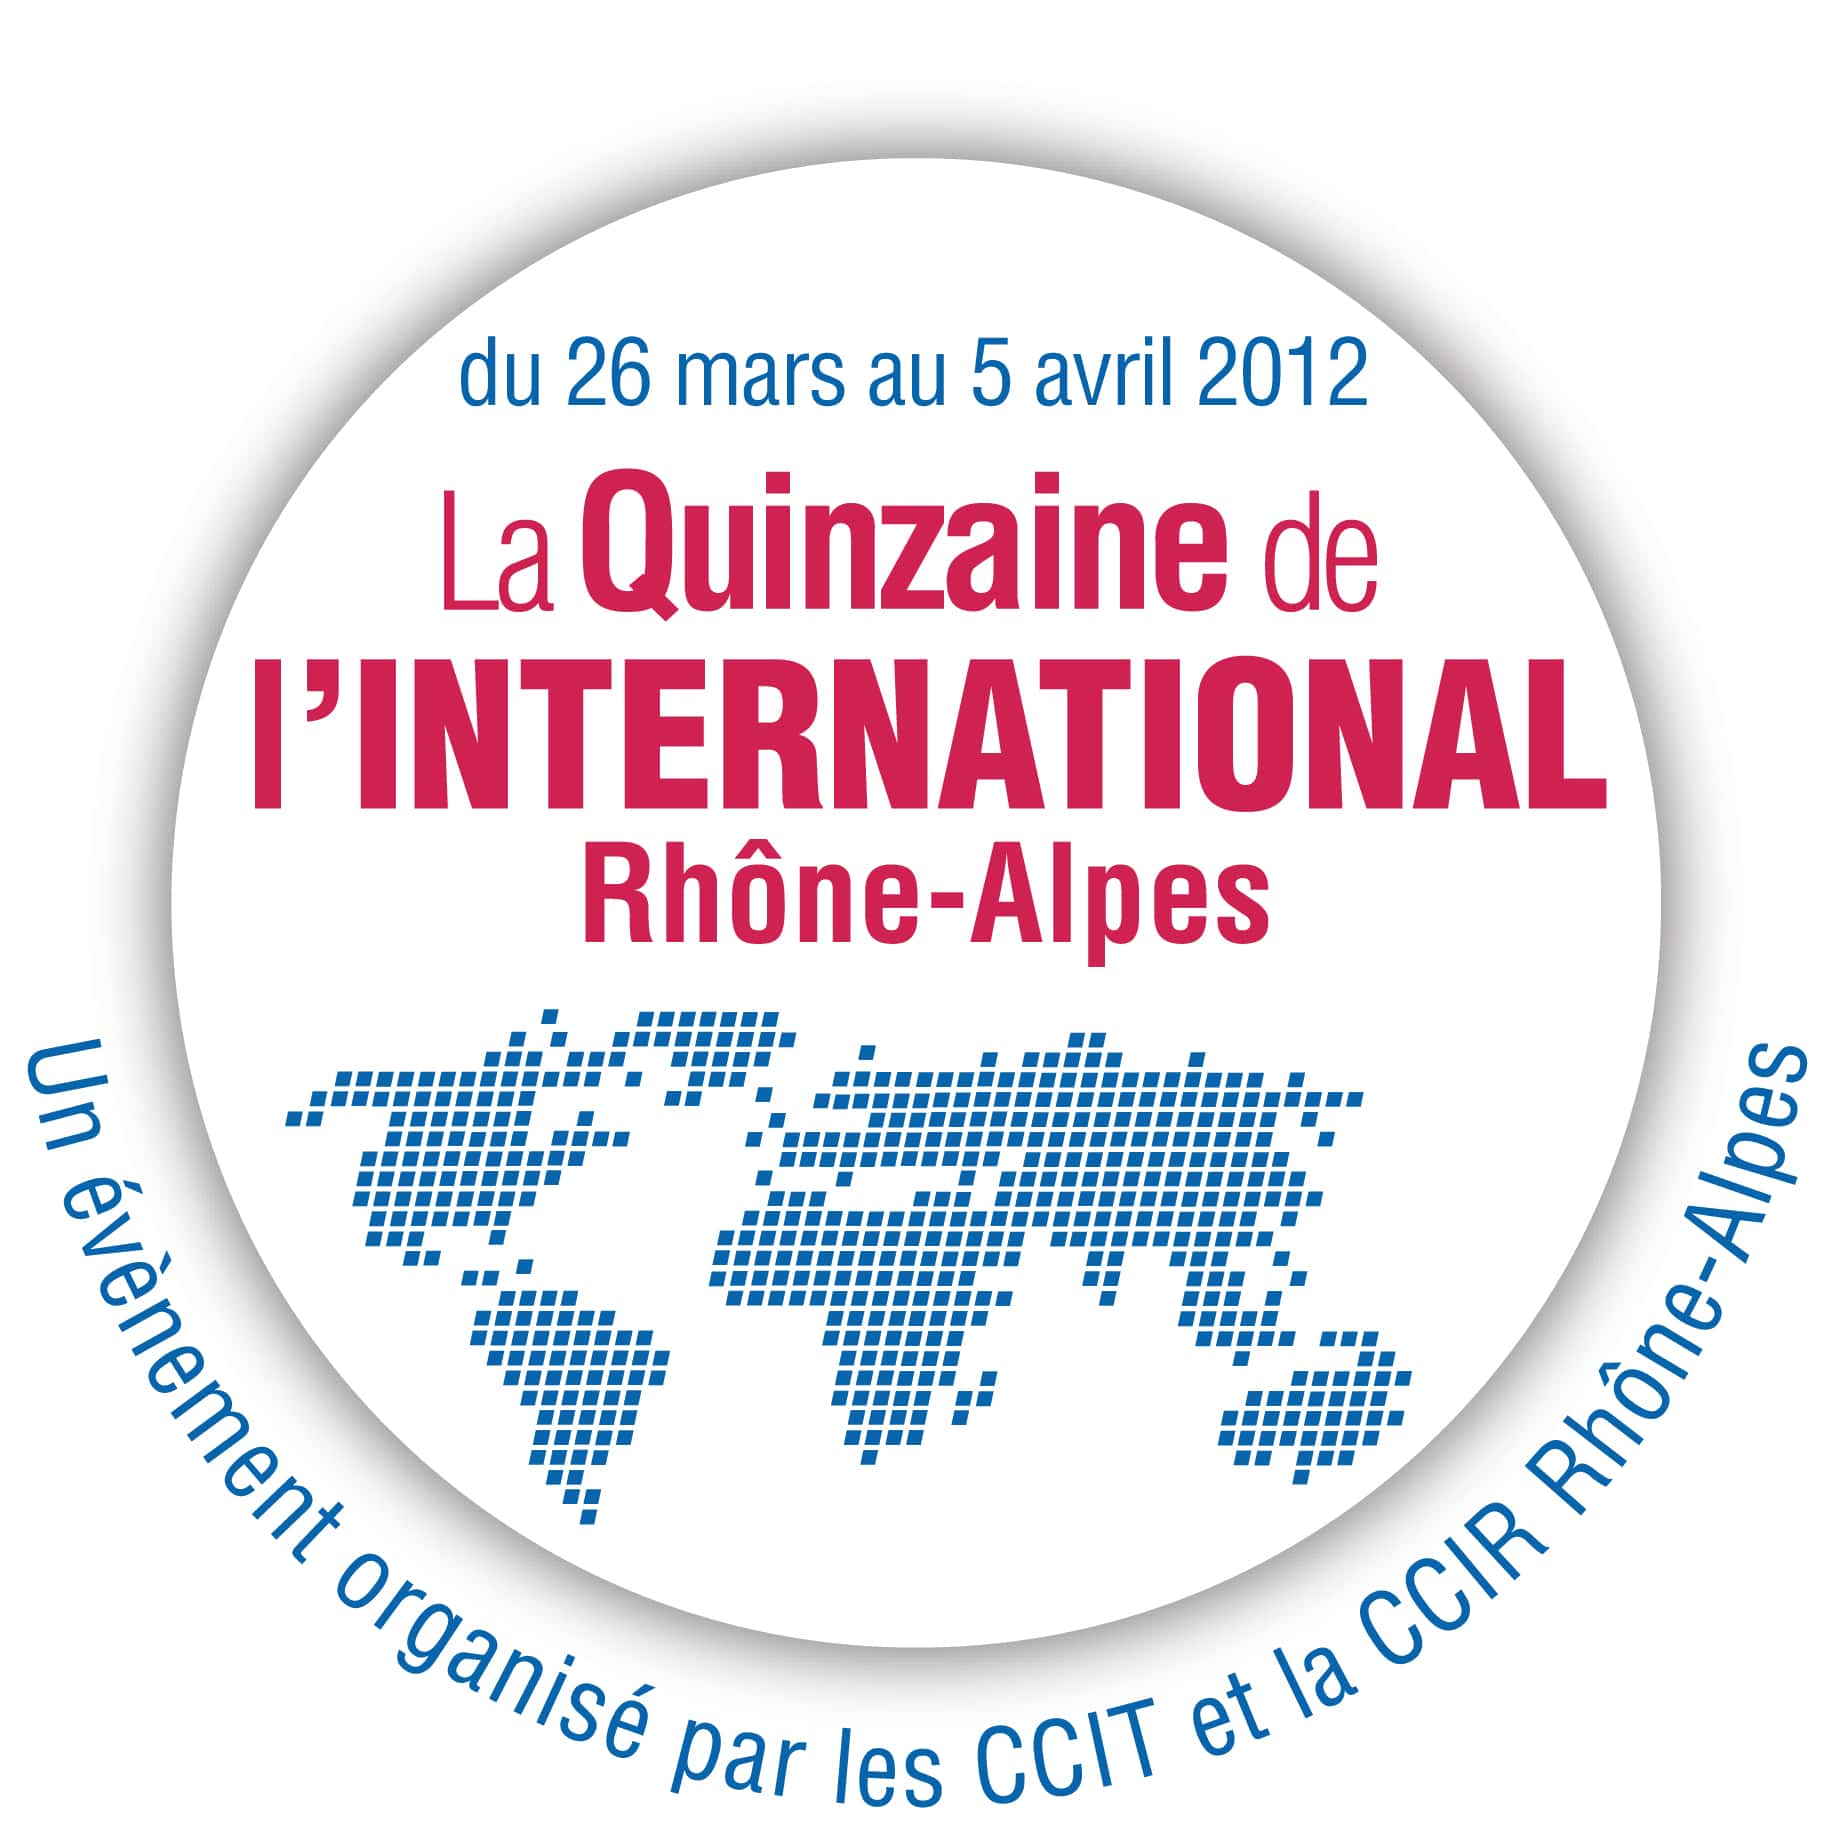 Quinzaine de l’international Rhône-Alpes